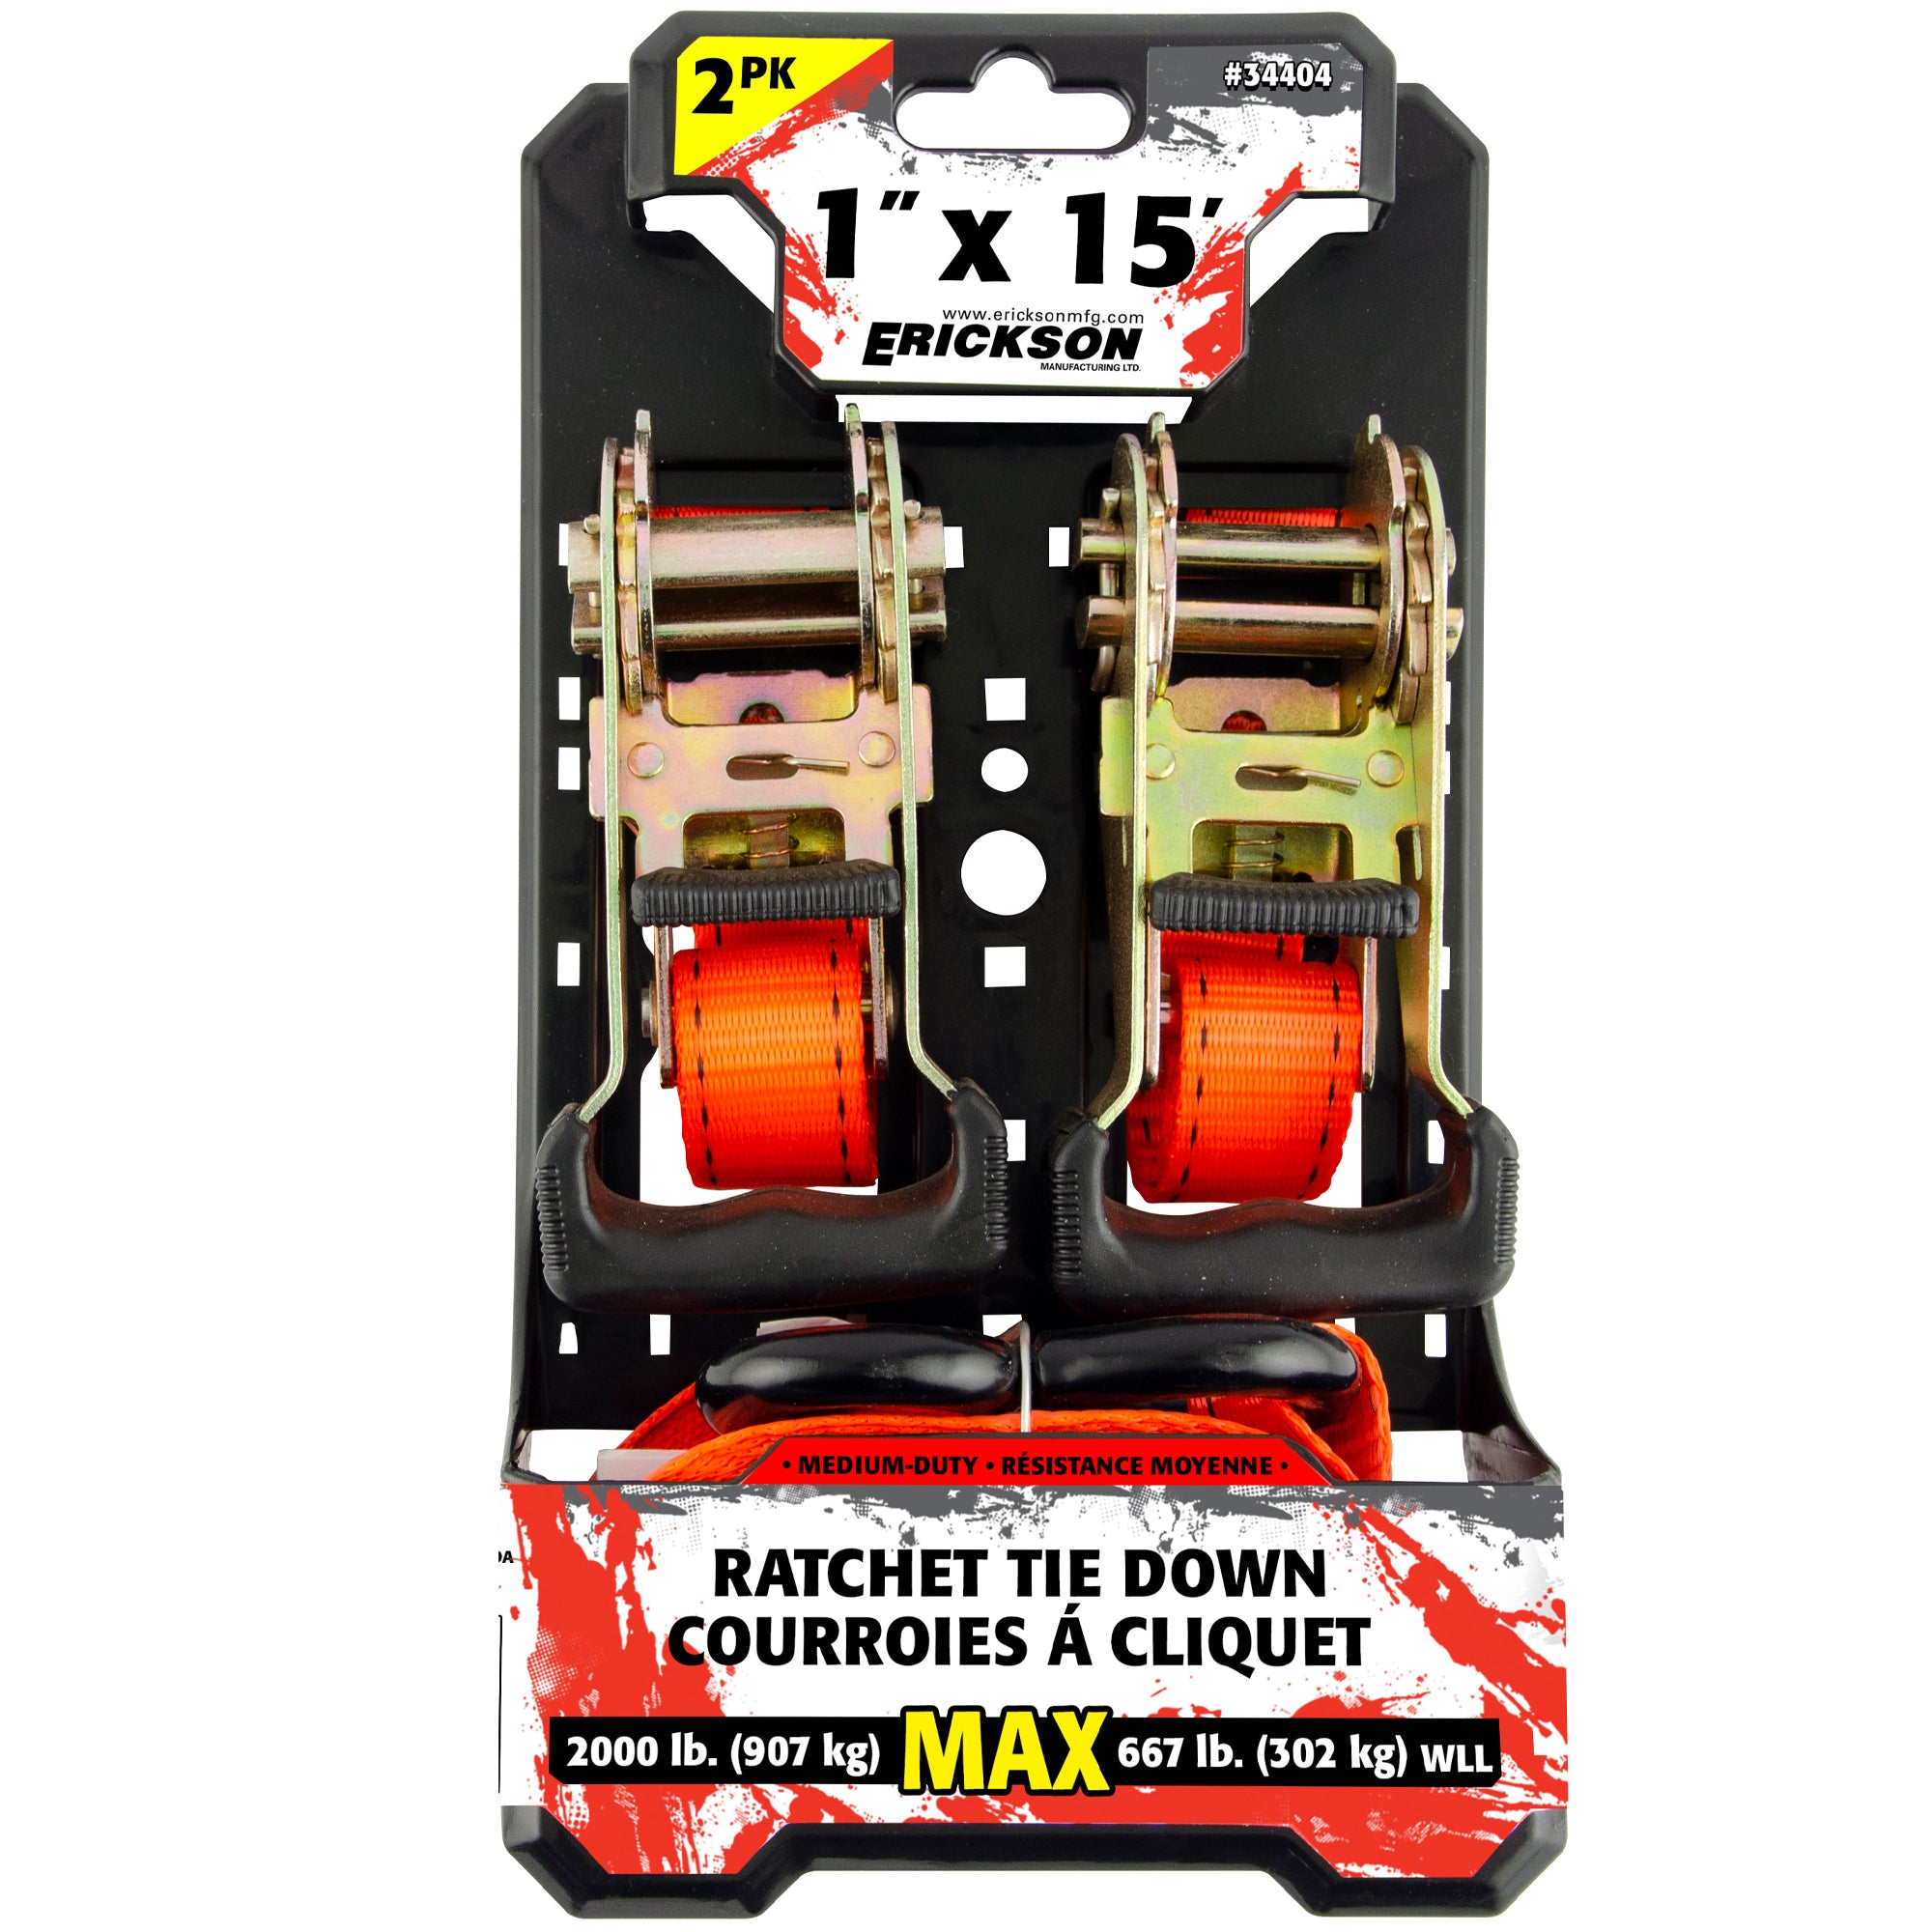 Ratchet Tie Down Straps 1x15' 2000 lb Load Rating 2 Pack 15